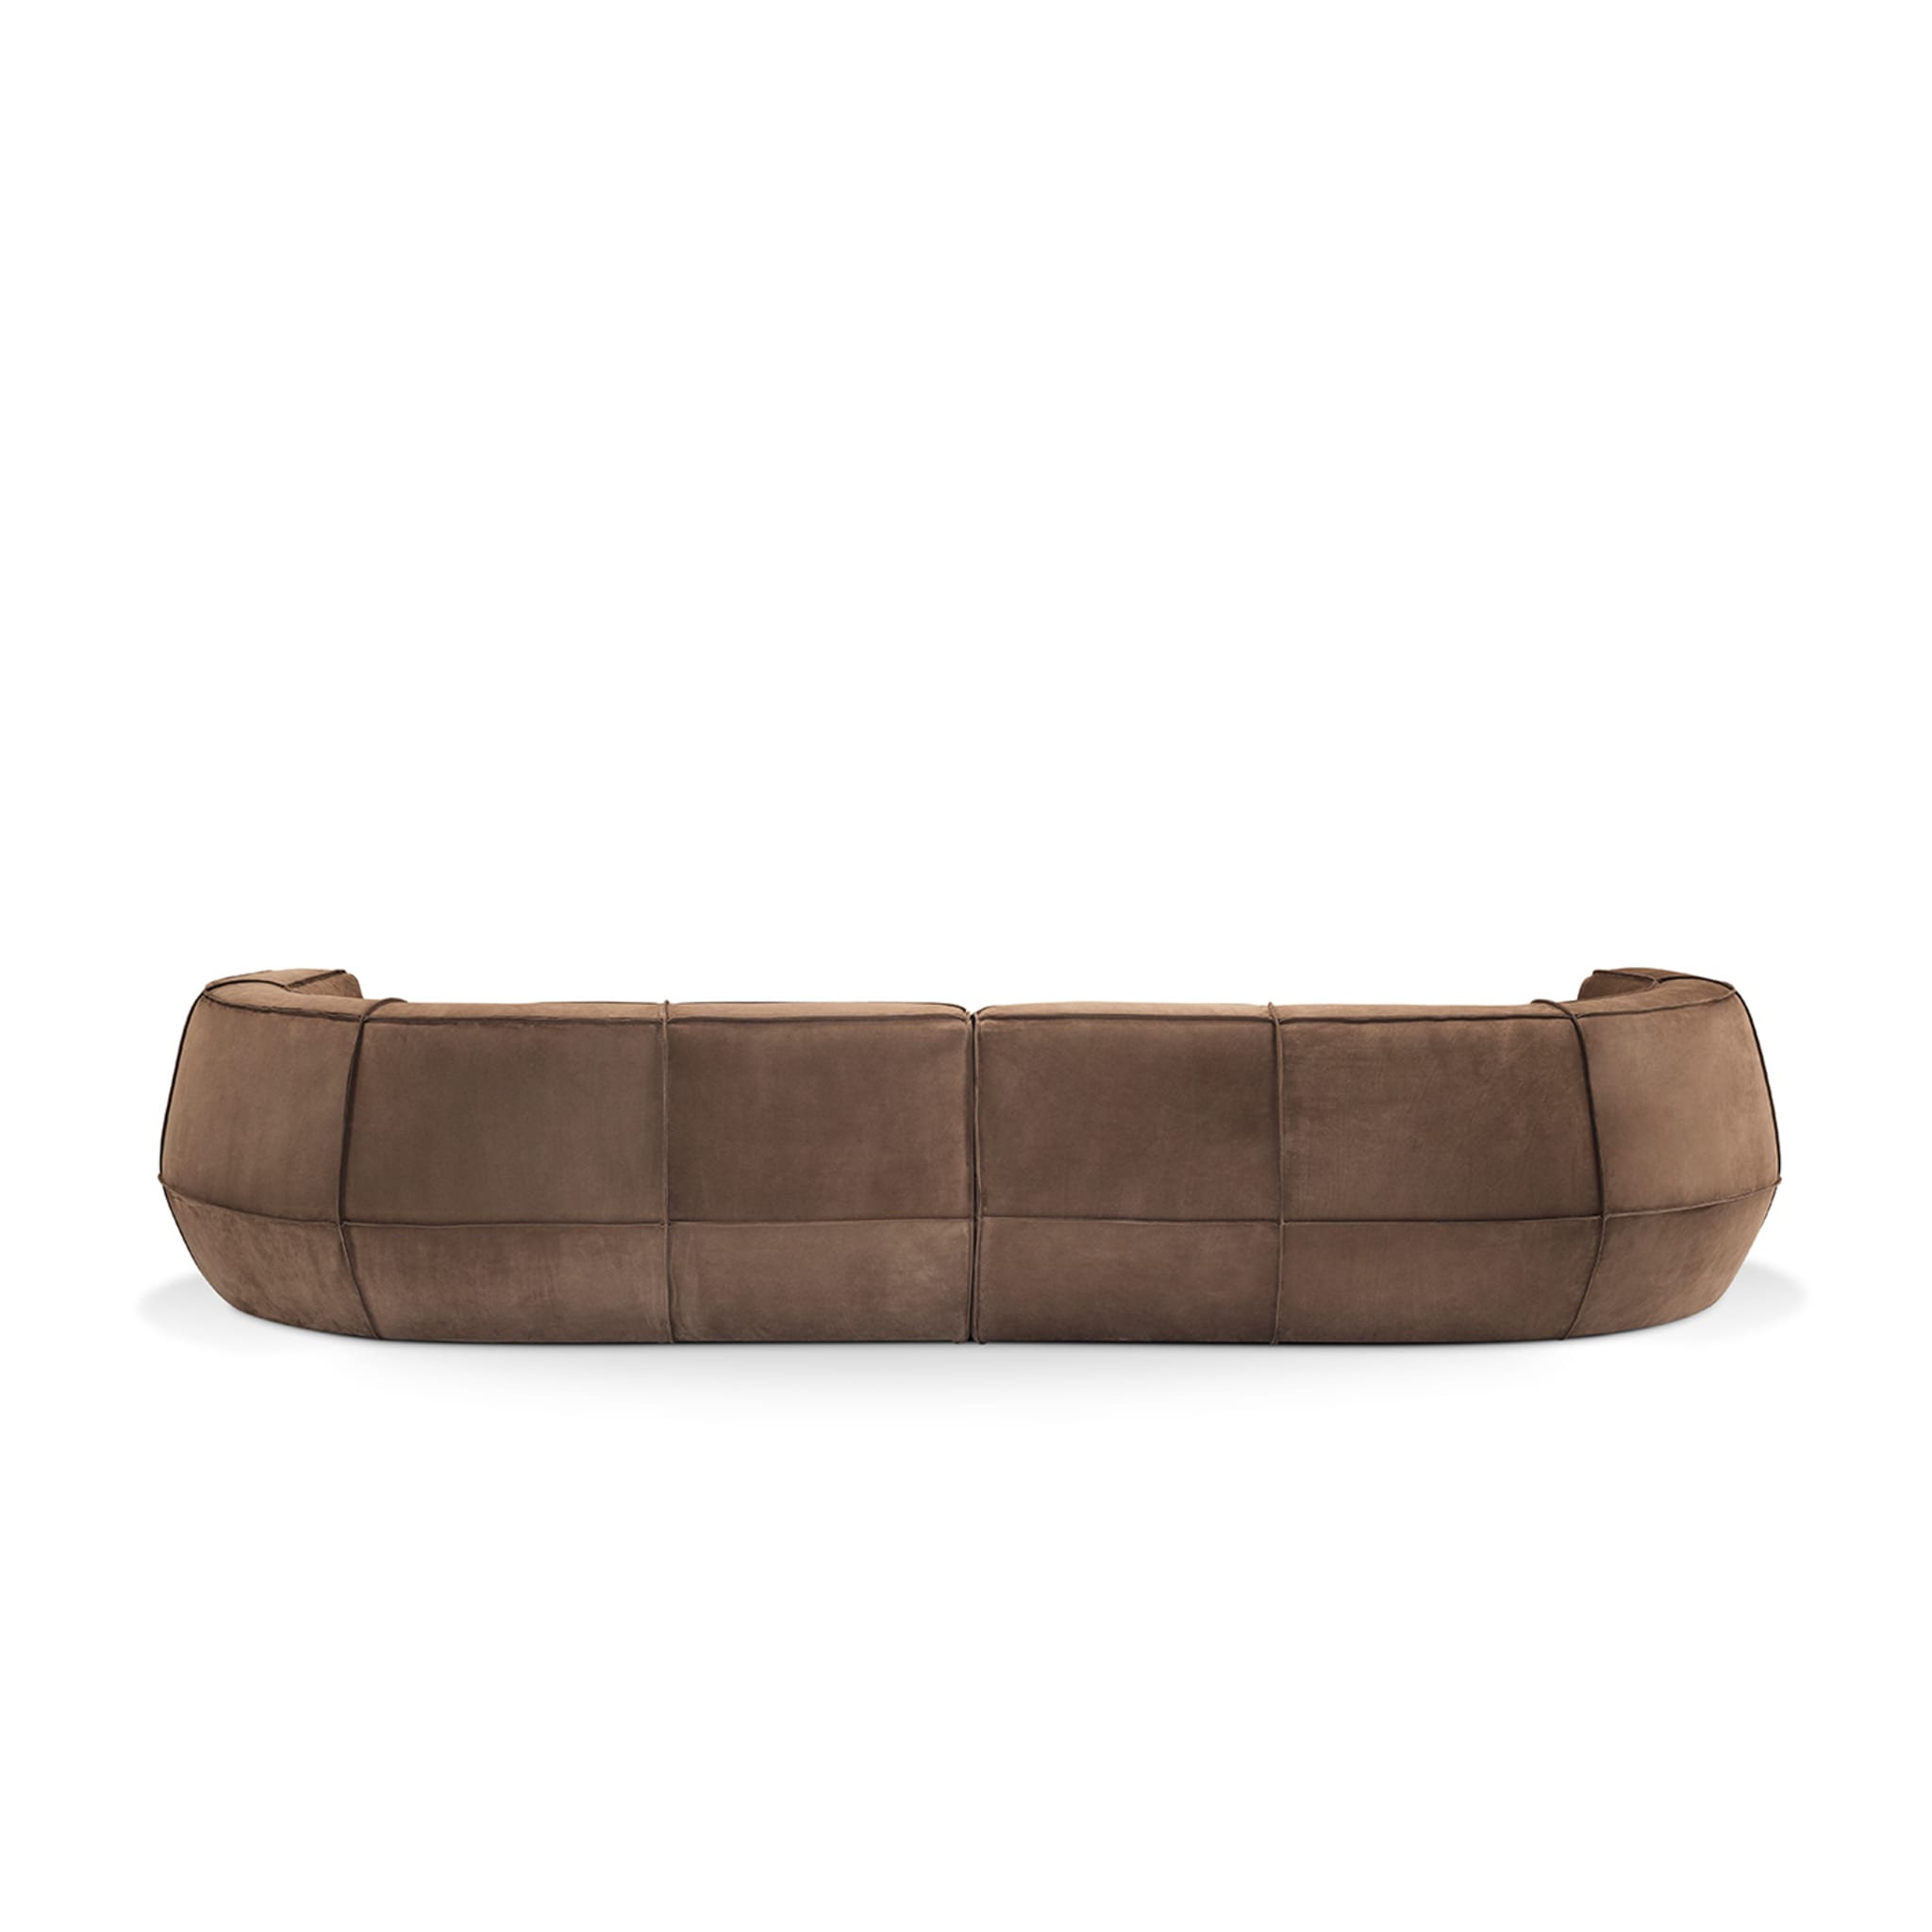 Infinito Medium Brown Sofa by Lorenza Bozzoli - Alternative view 1